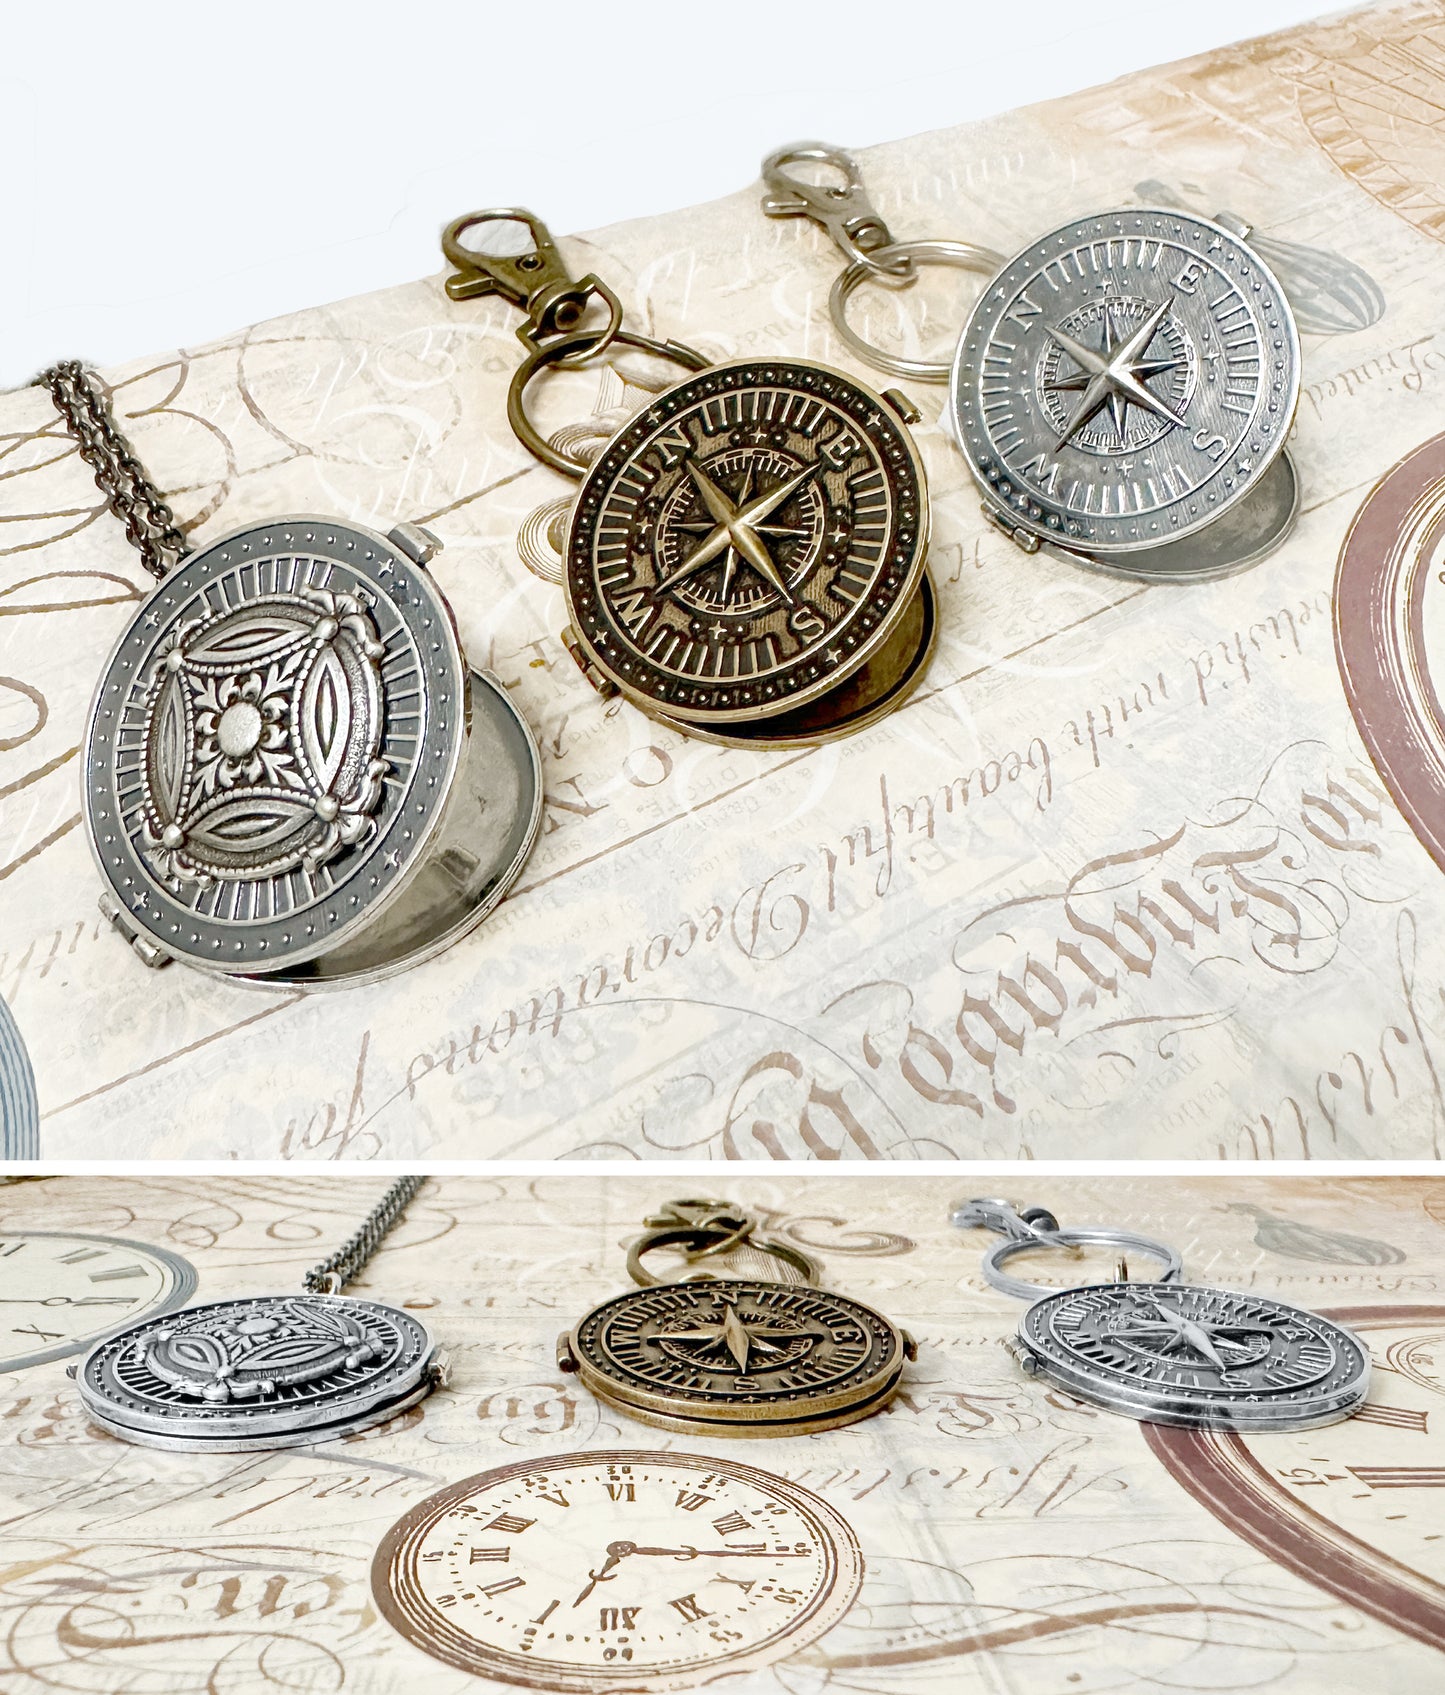 Keychain Locket / Locket Keychain / Mens Locket / Compass Keychain / Photo Locket / Grandpa Gift / Dad Gift / Custom Locket / Compass Locket